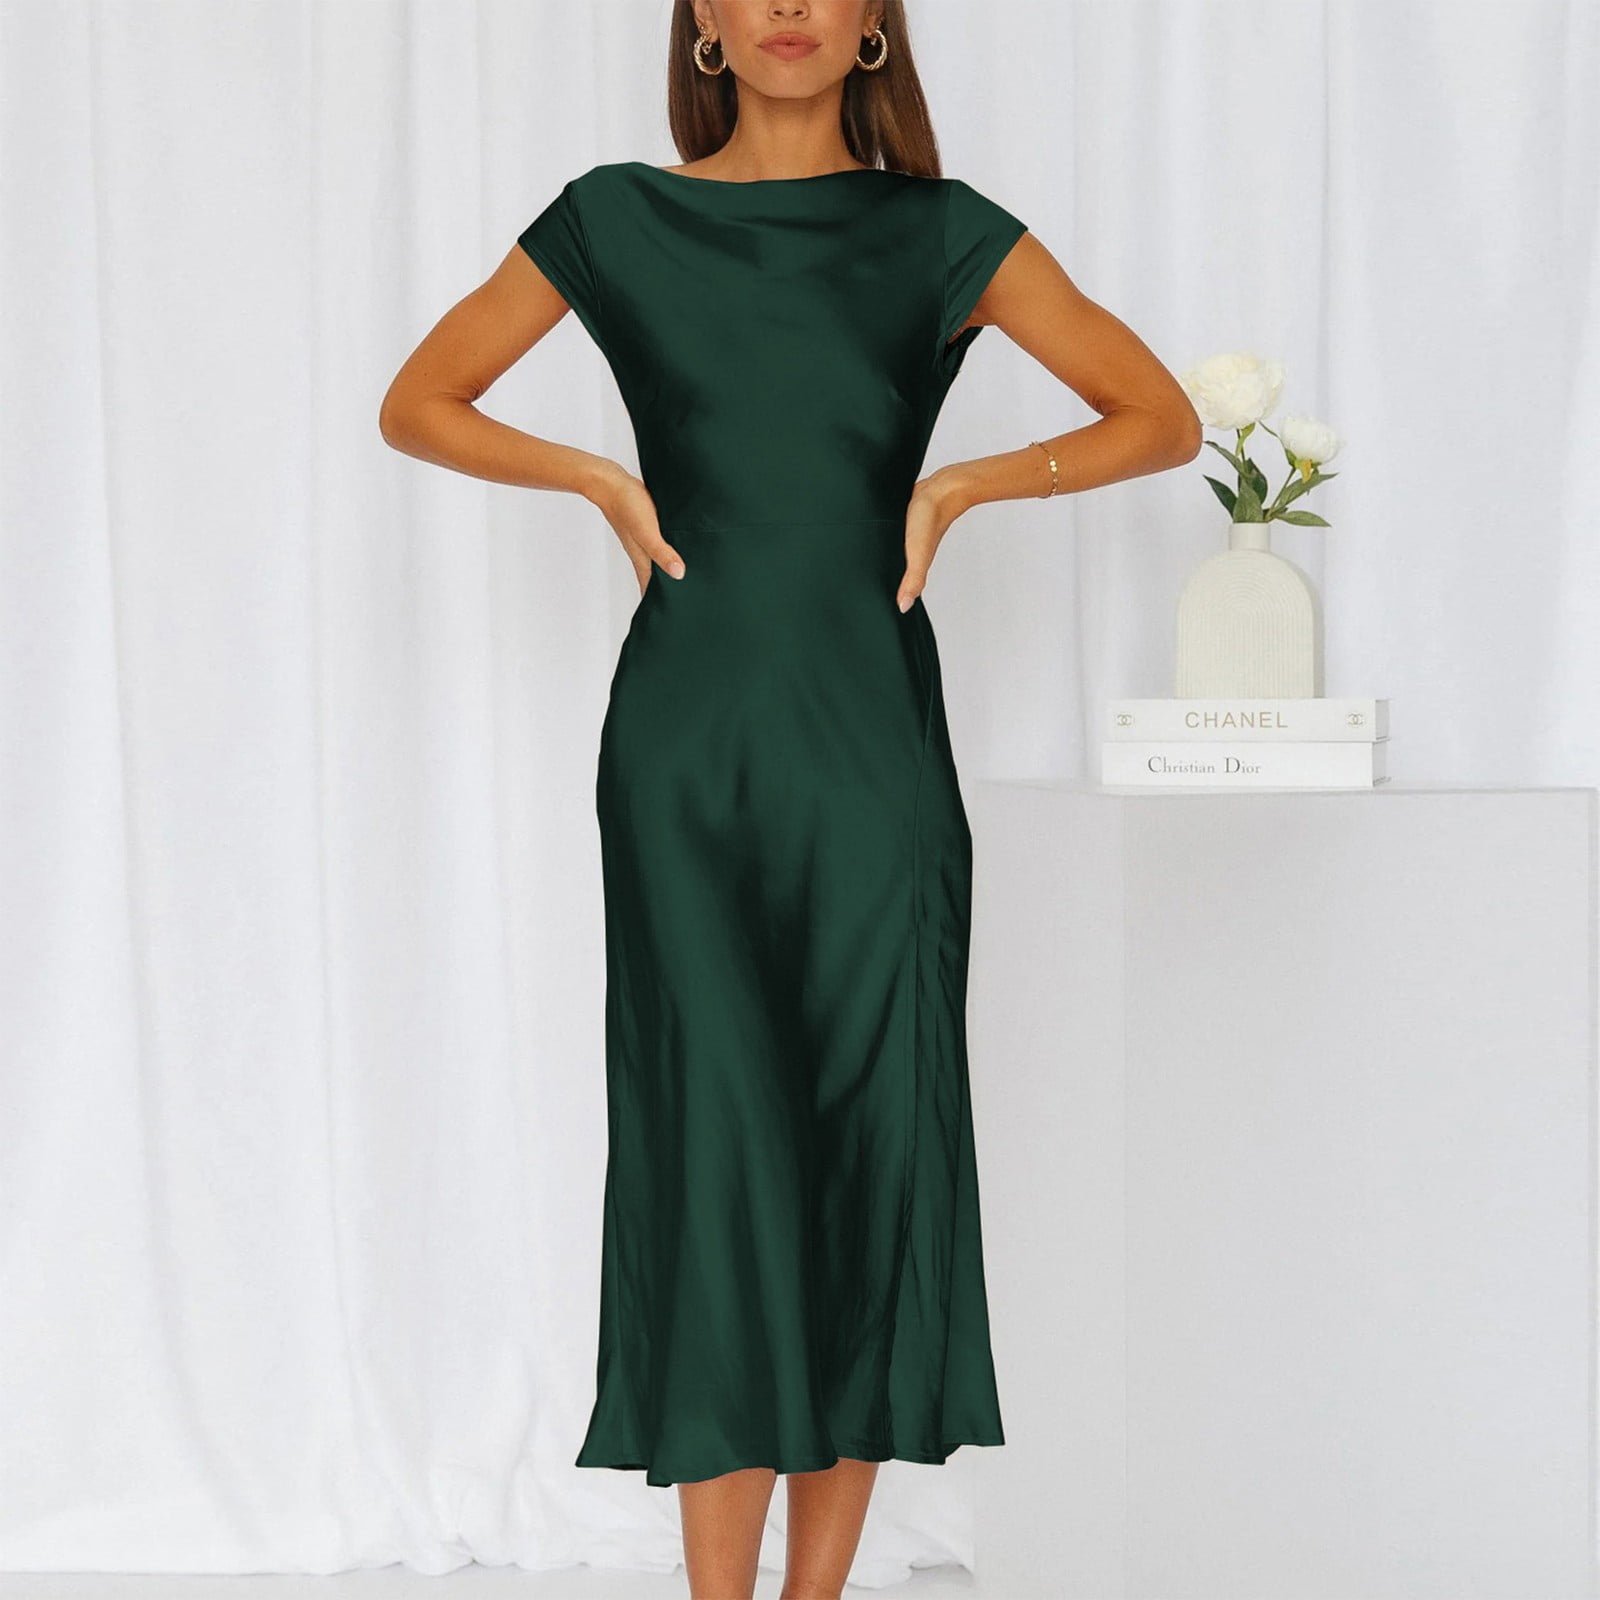 TKing Fashion Women's Summer Elegant formal Solid Color Slim Wrap